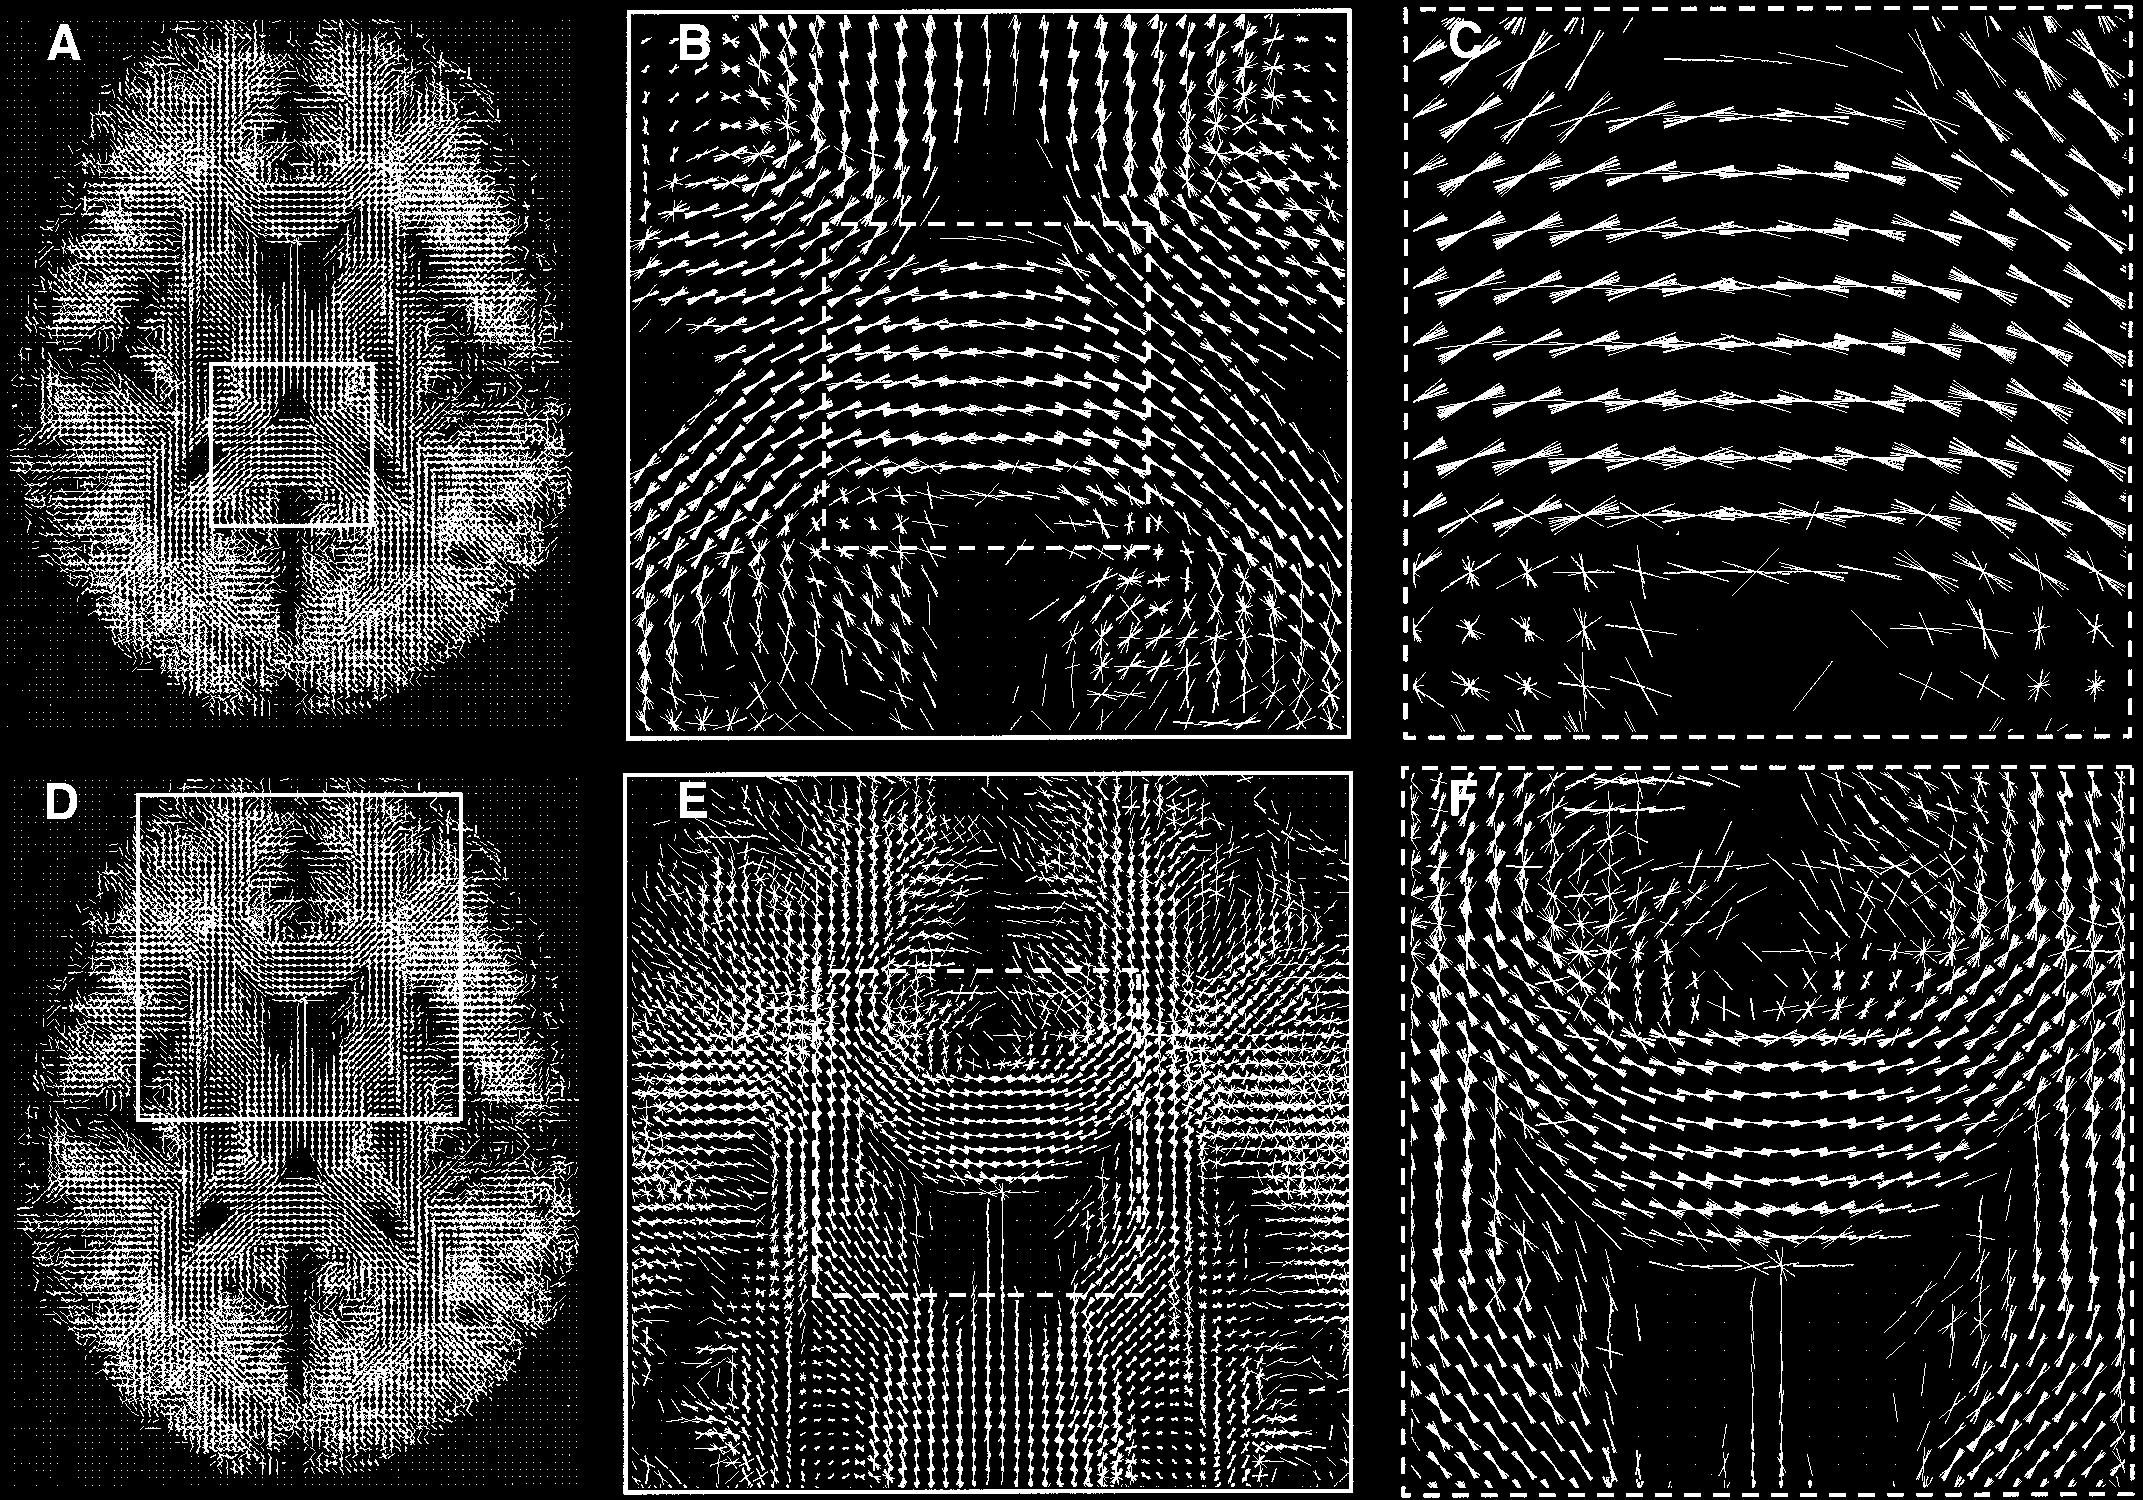 Spatial normalization and averaging of diffusion tensor {MRI} data sets